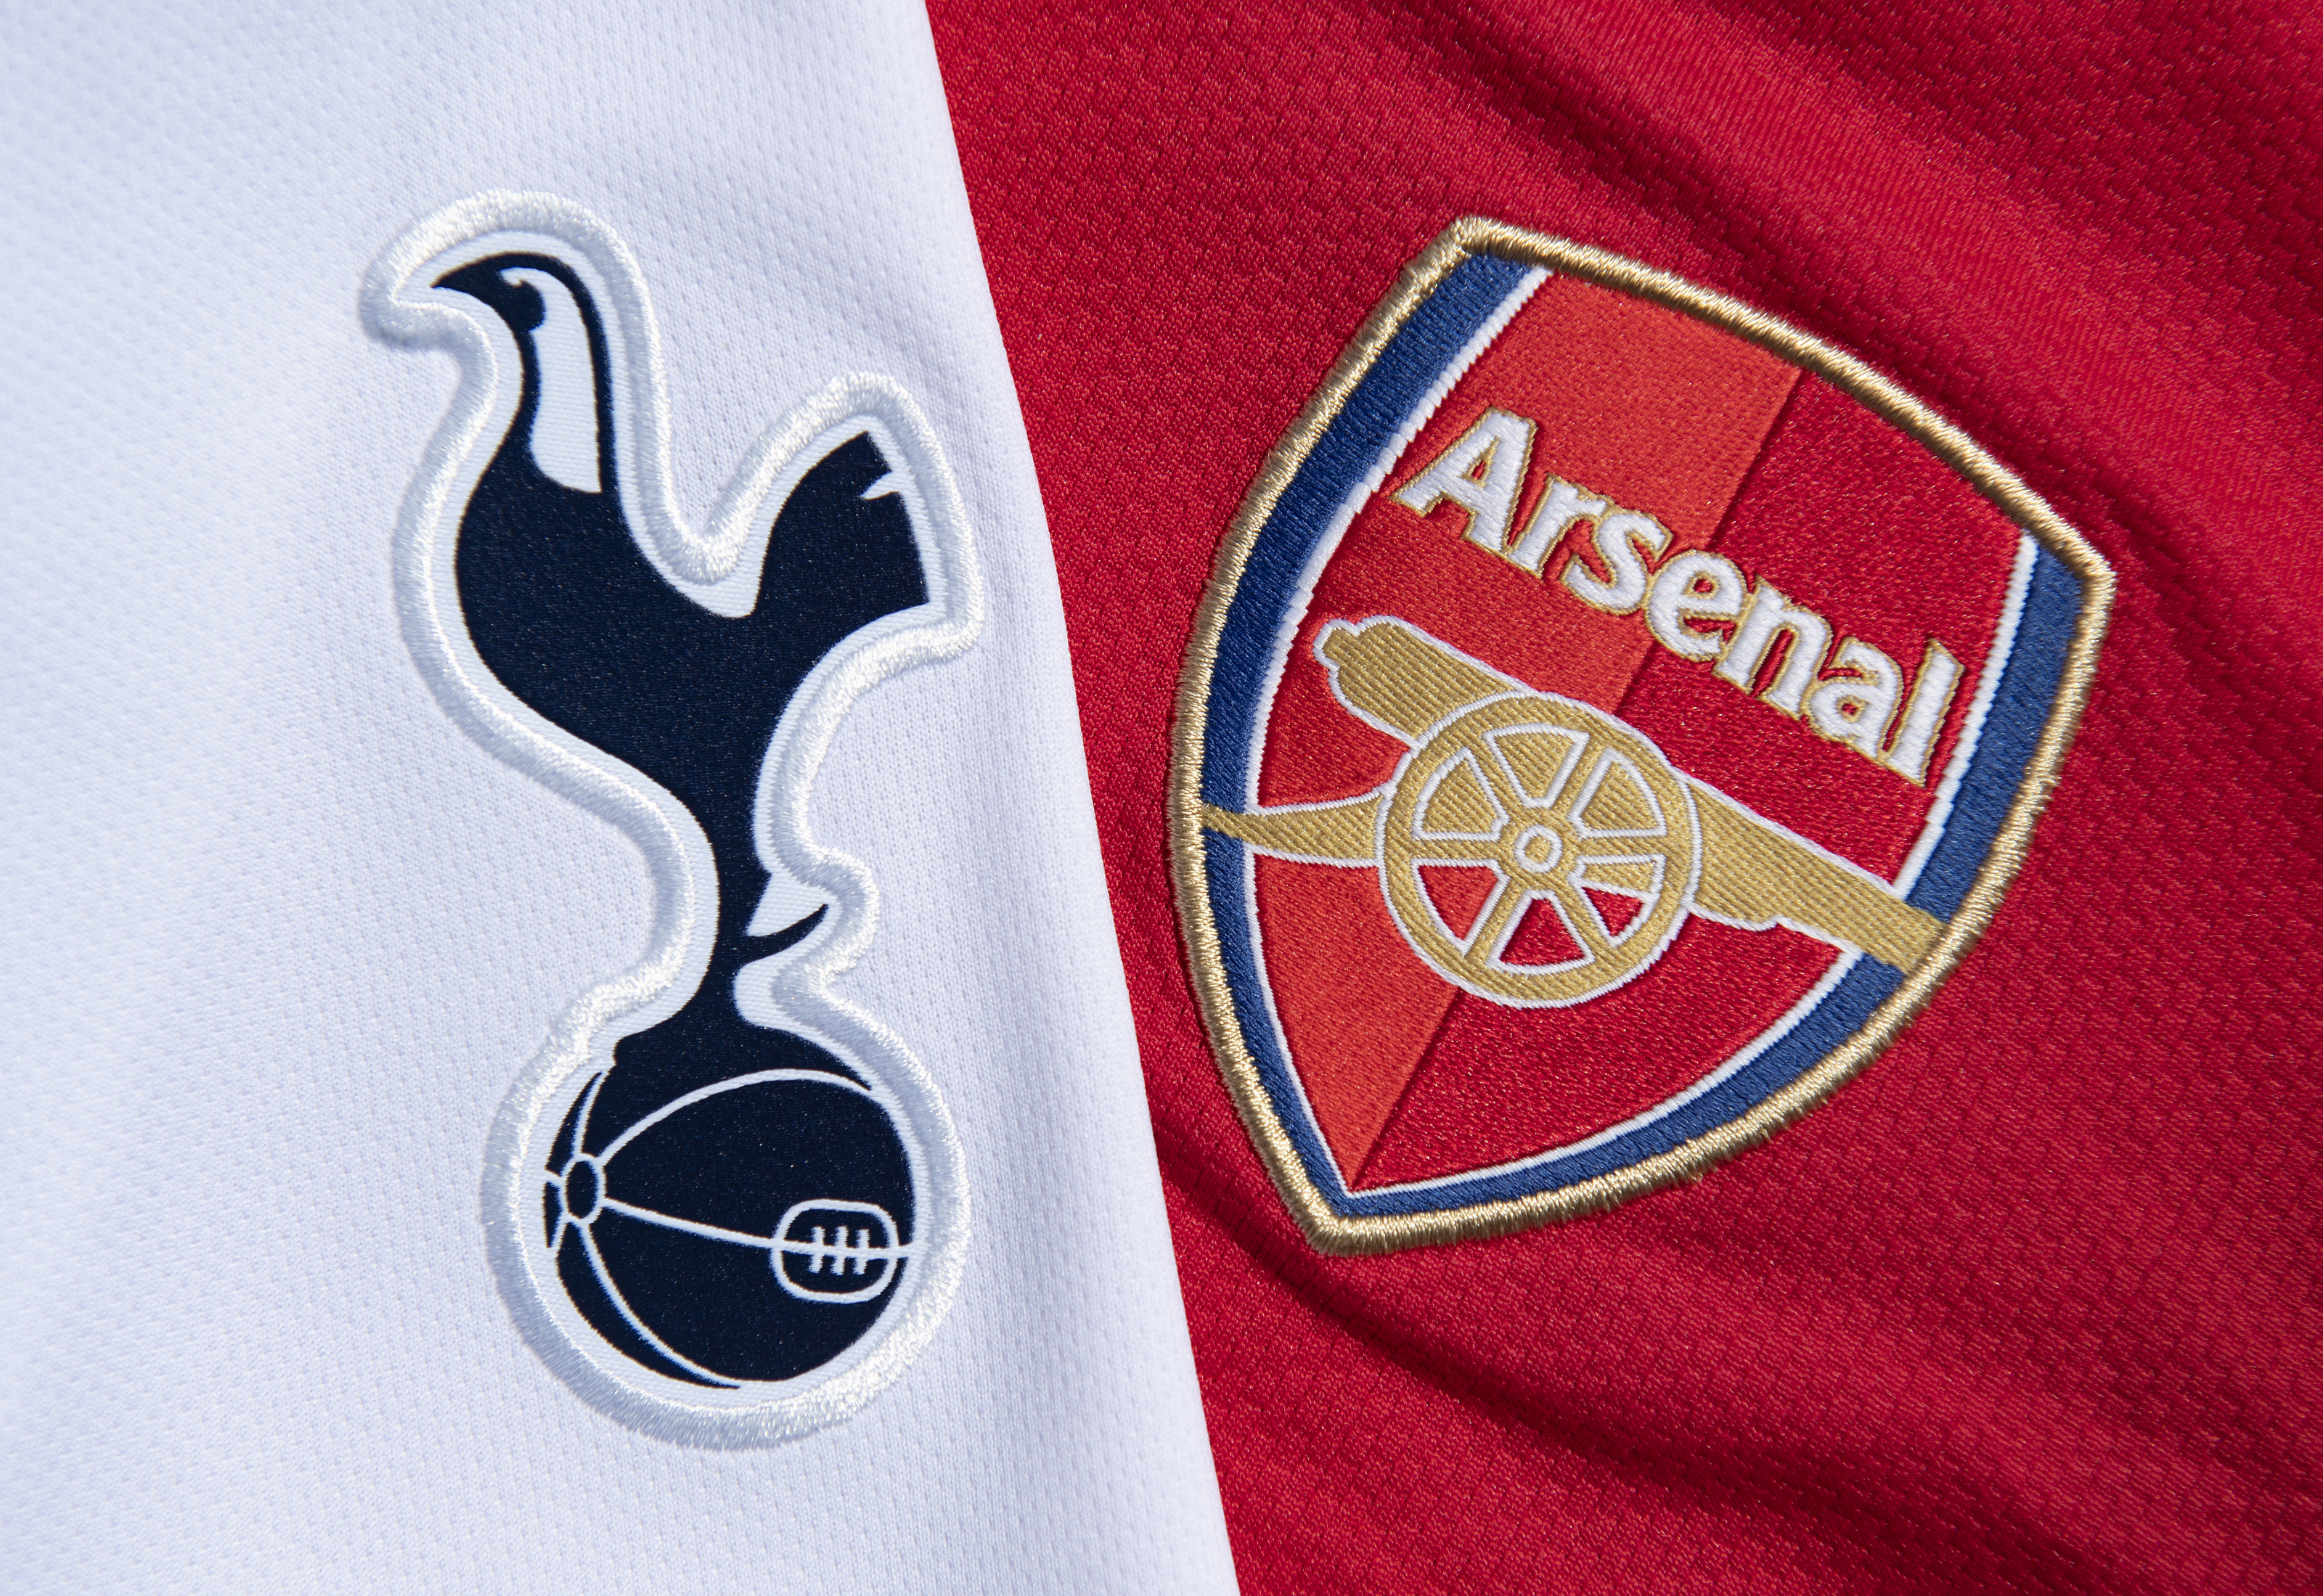 Tottenham v Arsenal preview Champions League deciding derby